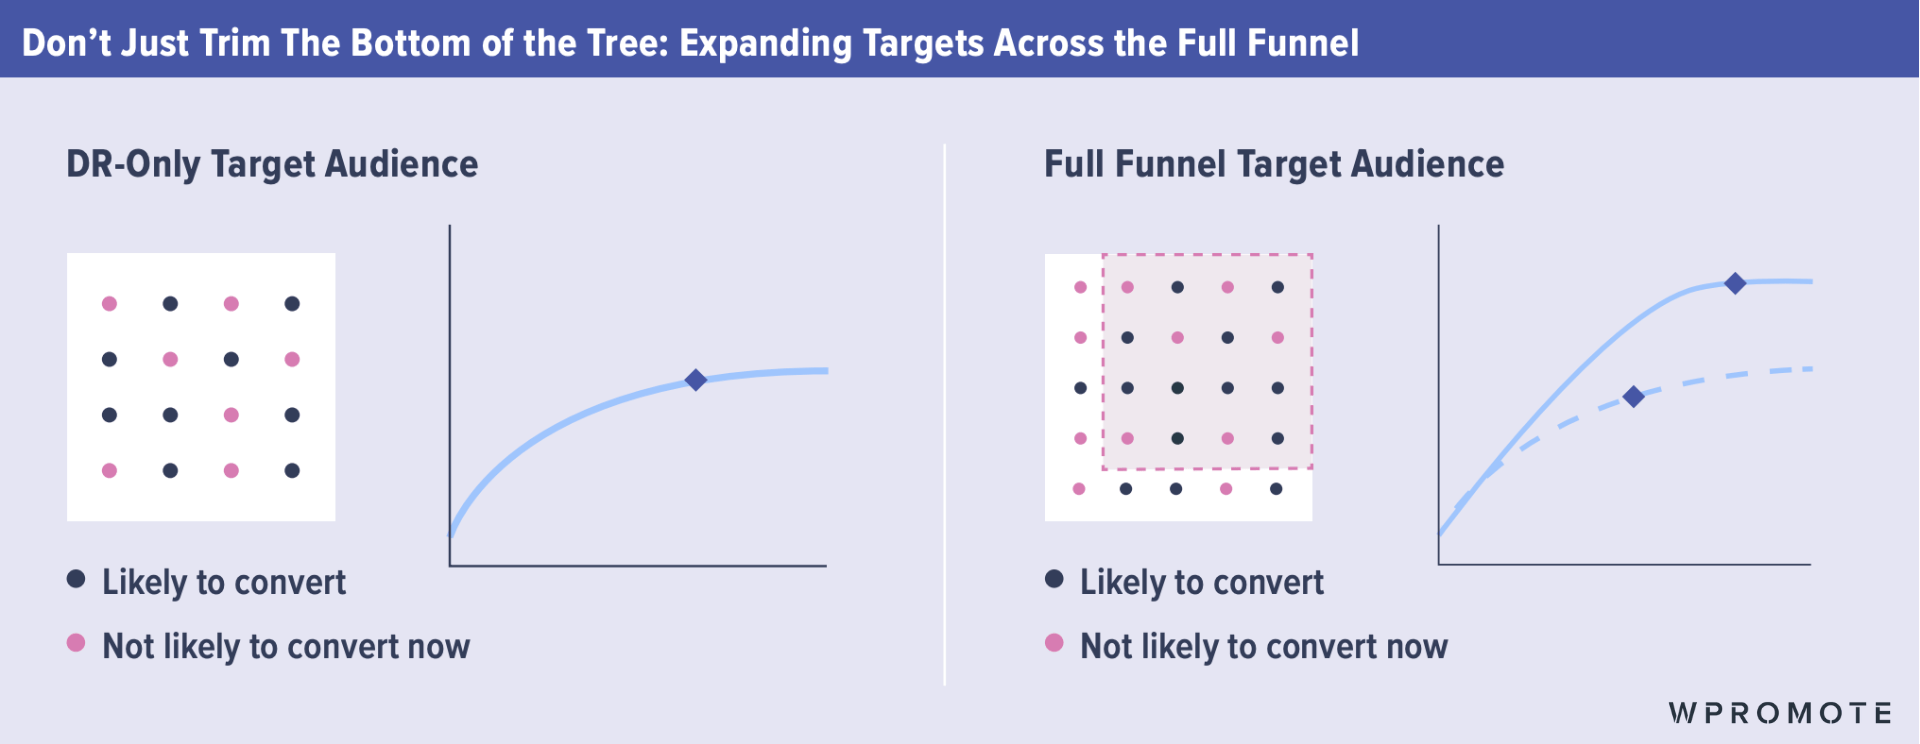 Direct response only vs. full funnel marketing opportunities